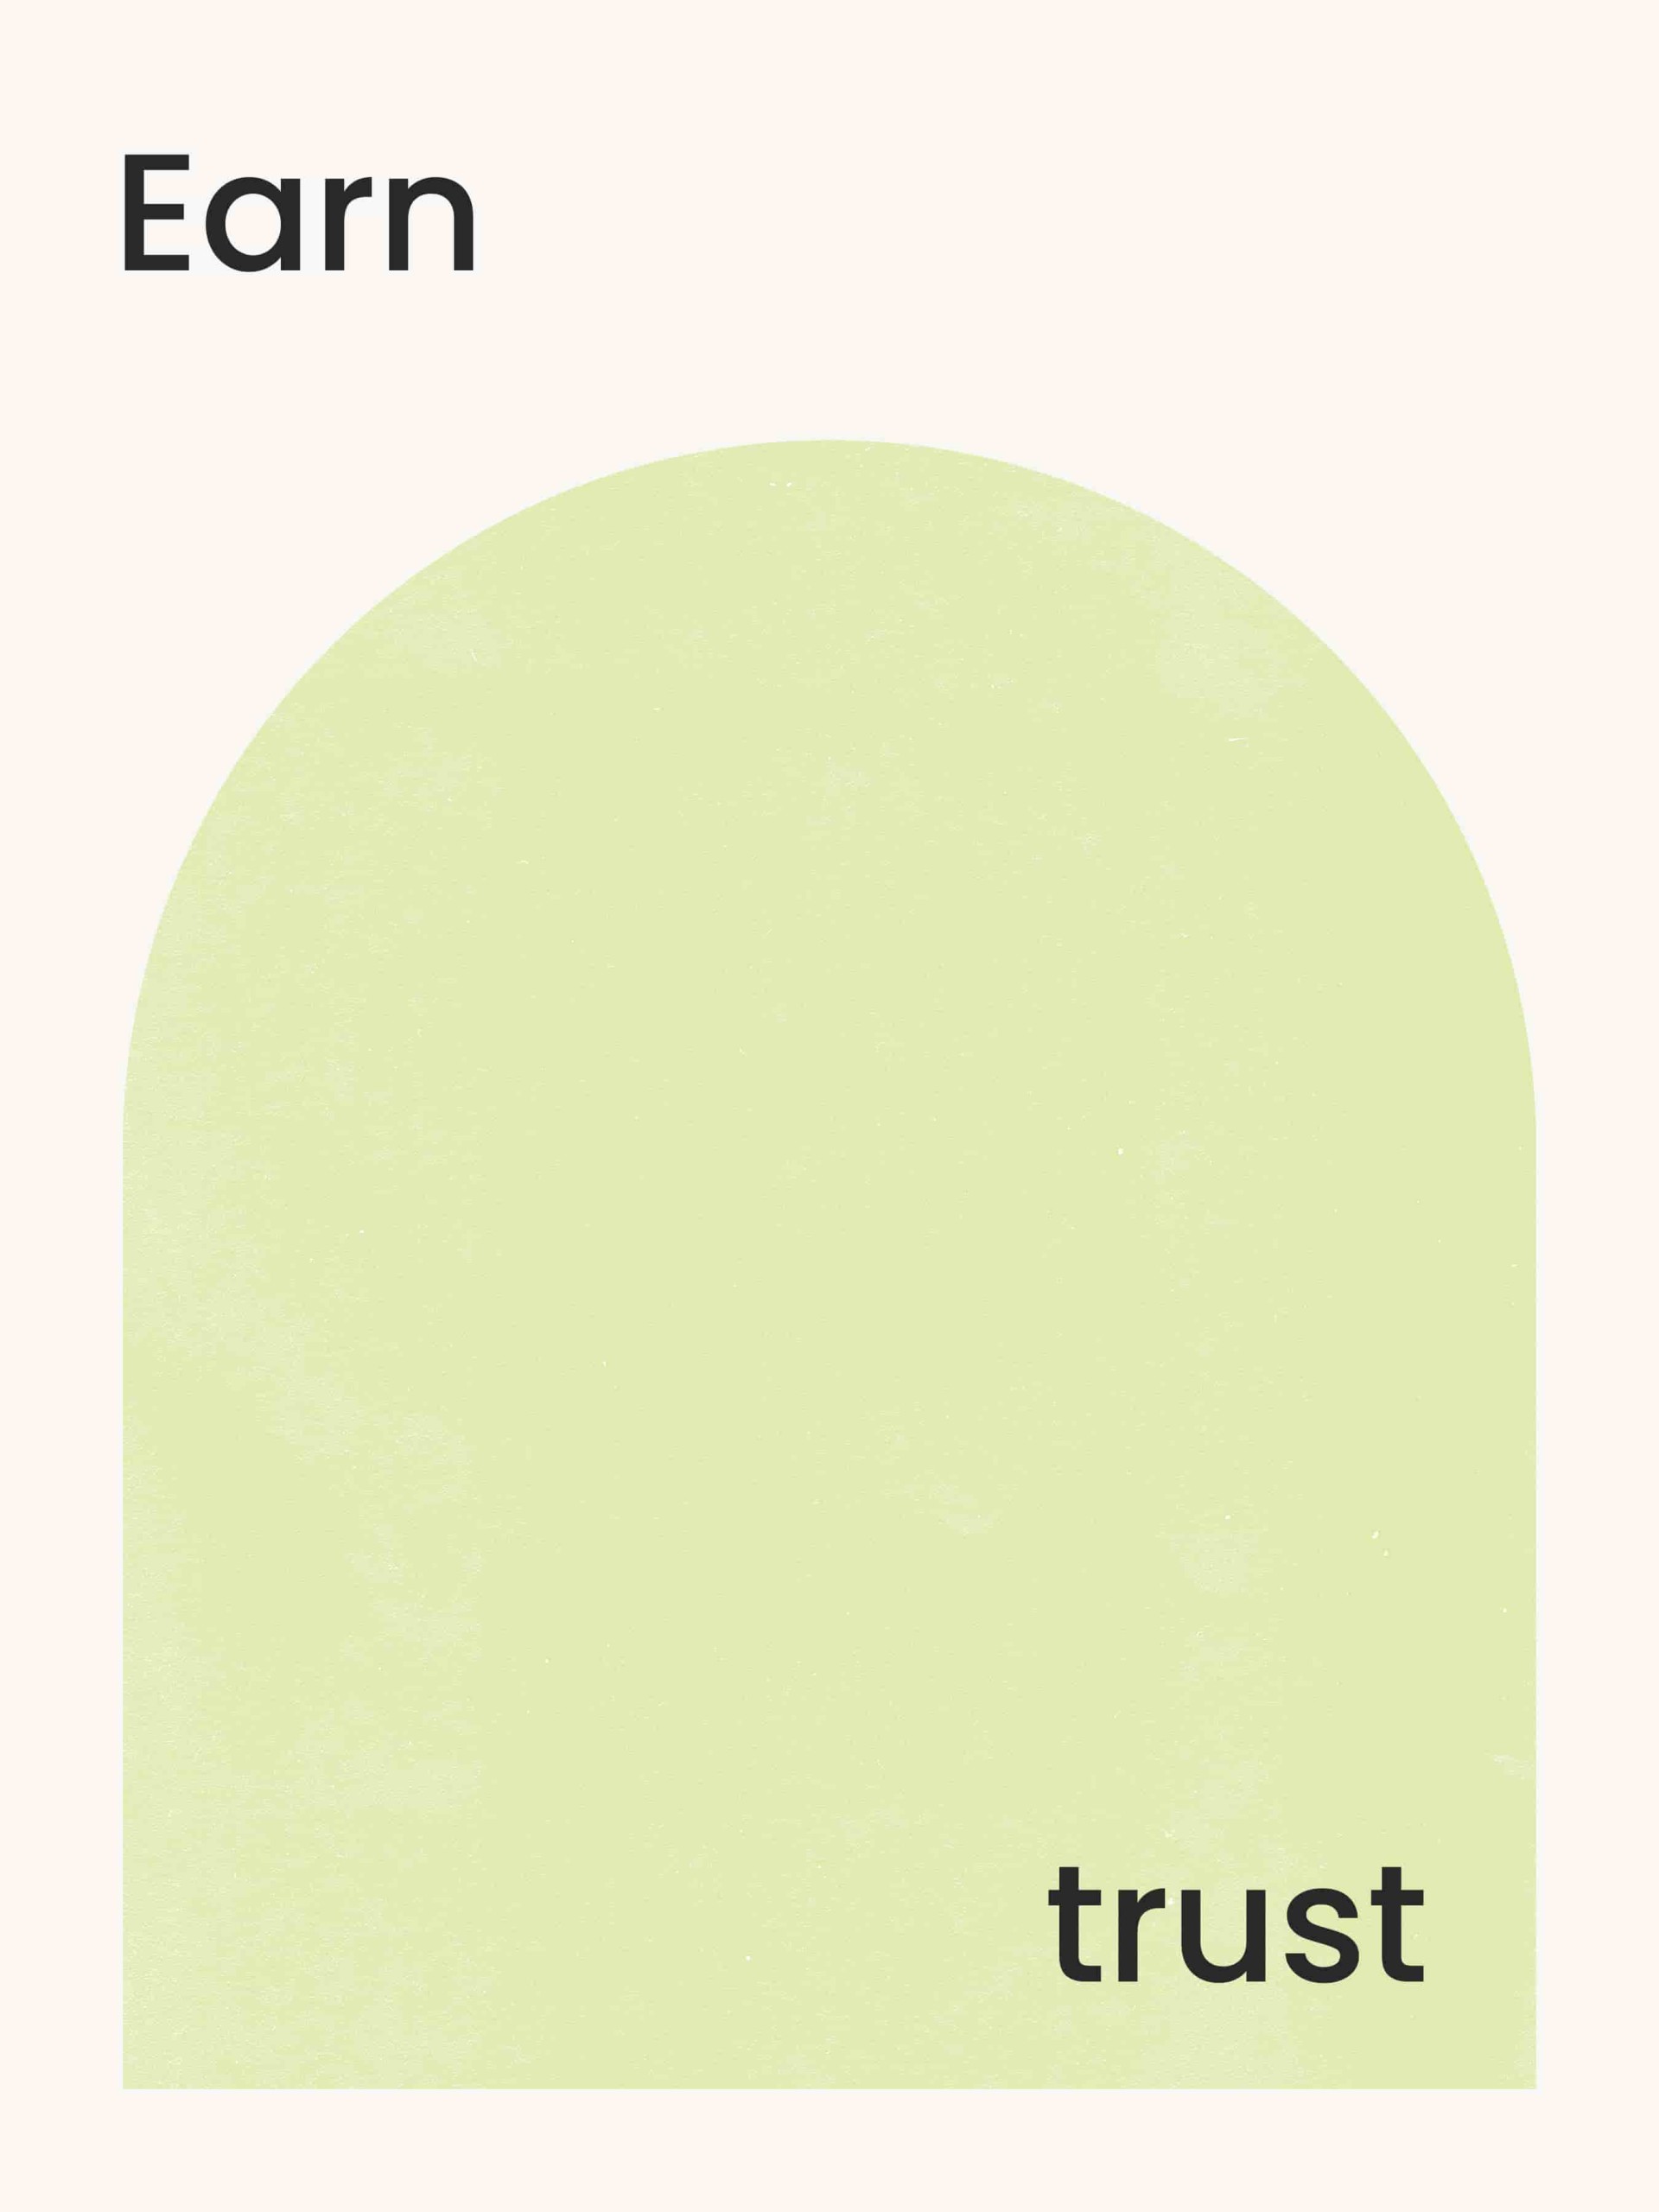 Earn trust value